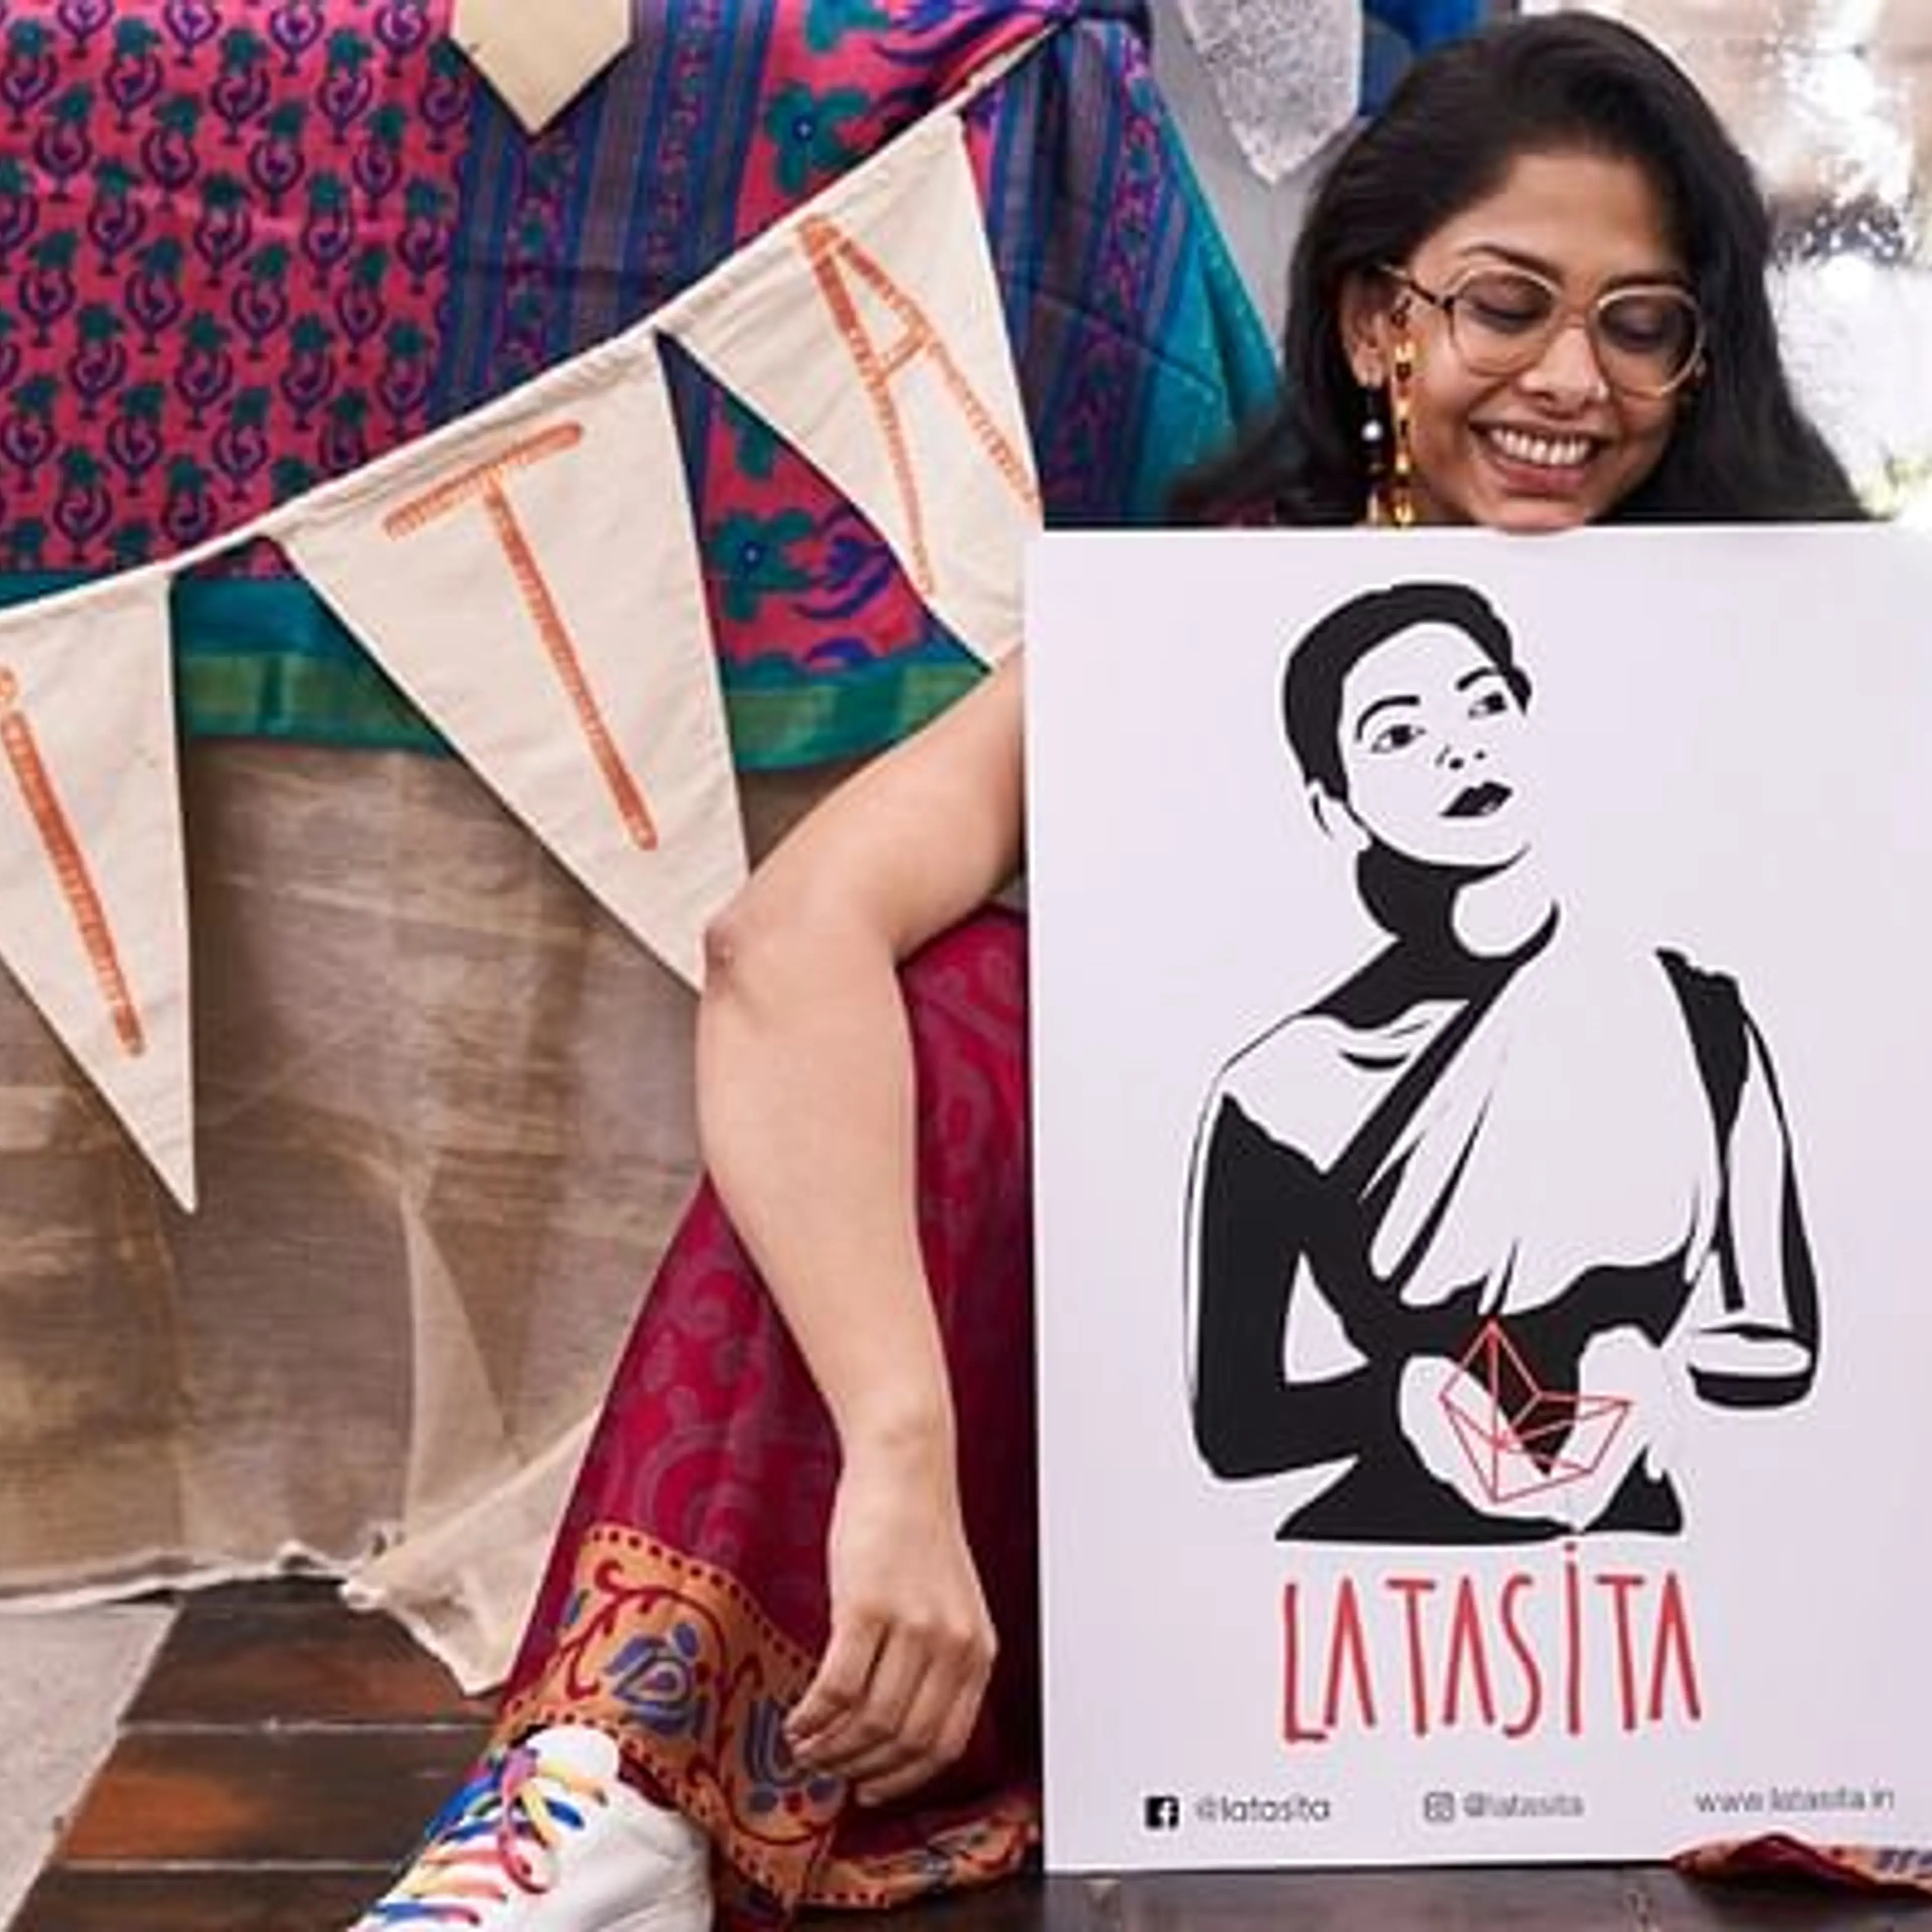 LataSita turns old sarees and fabrics from Durga Puja pandals into sustainable fashion